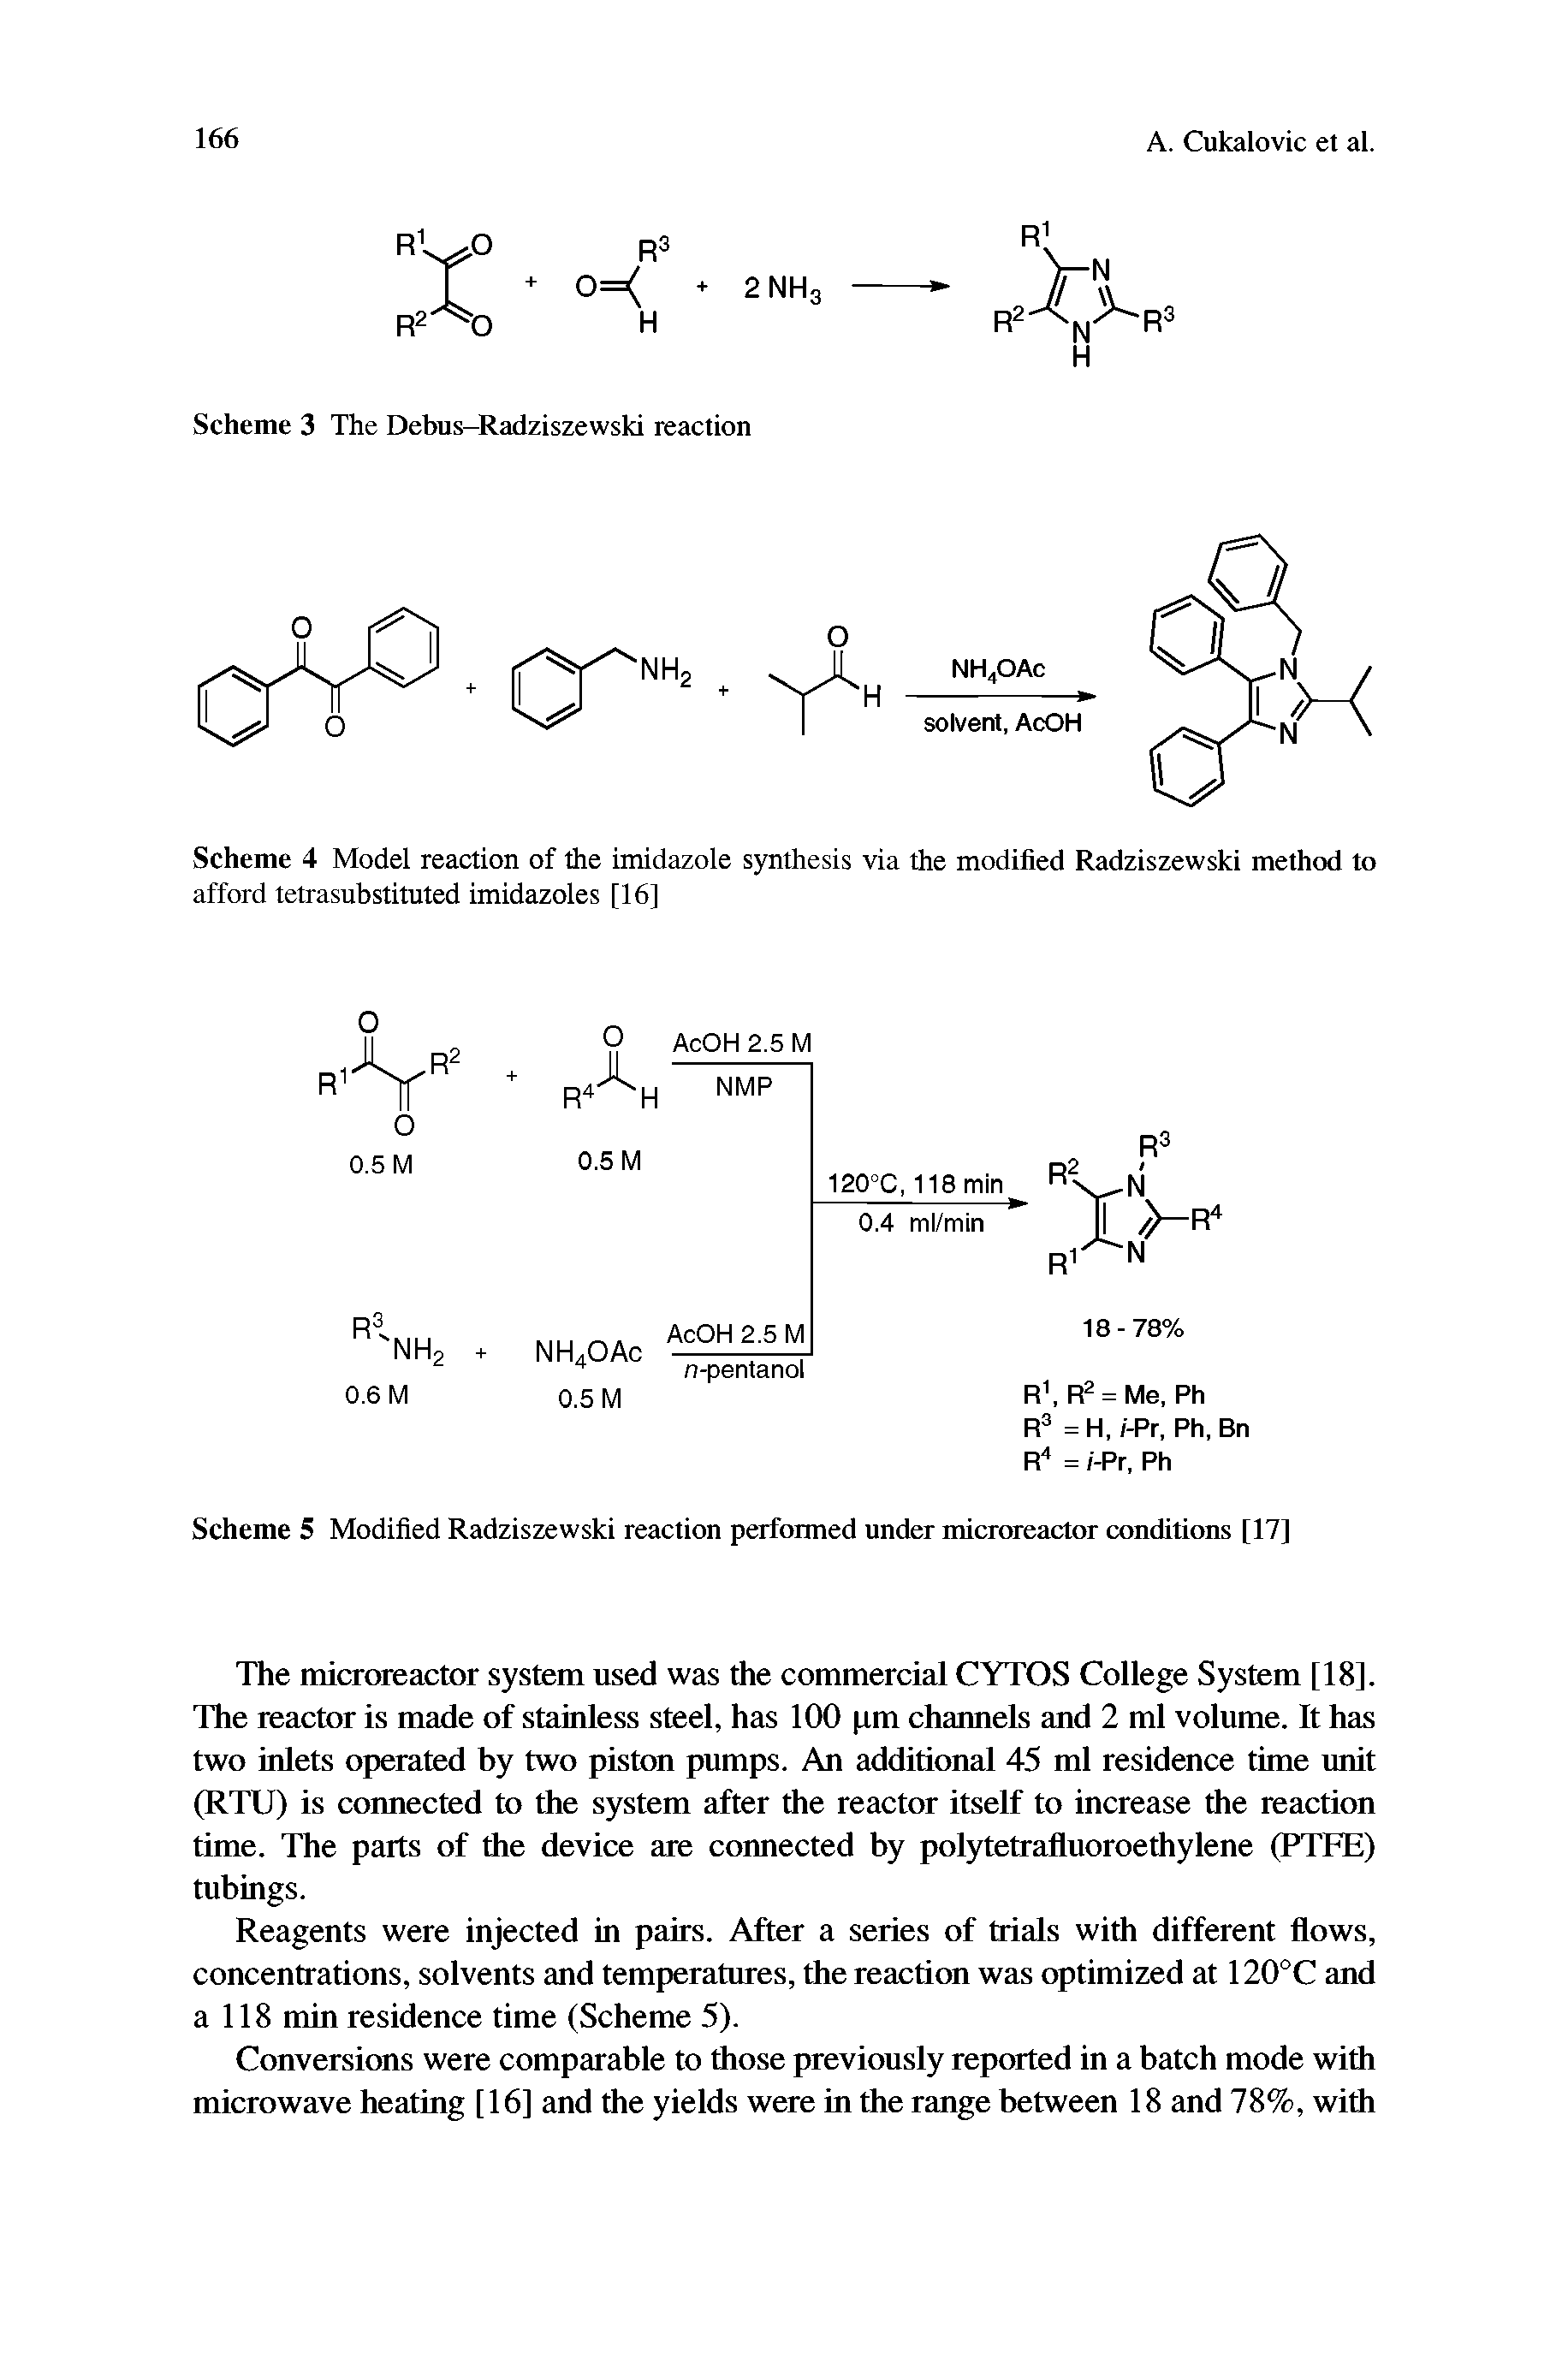 Scheme 4 Model reaction of the imidazole synthesis via the modified Radziszewski method to afford tetrasubstituted imidazoles [16]...